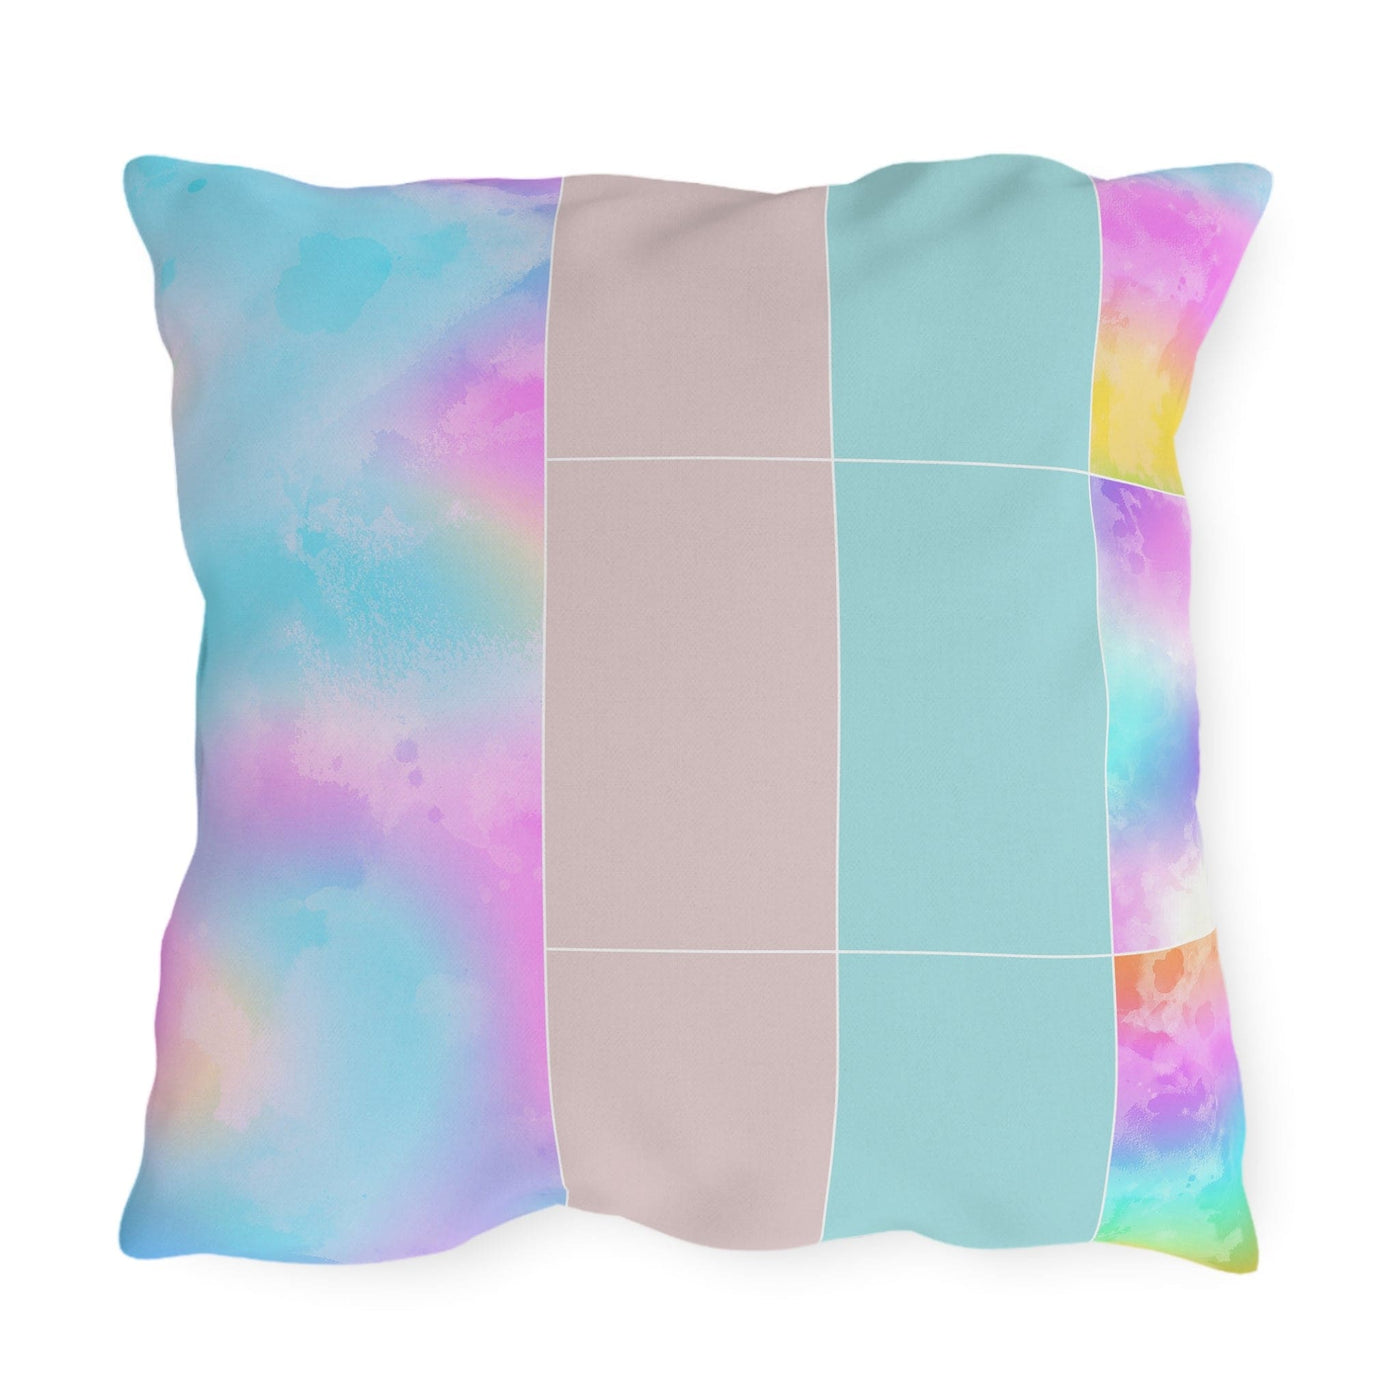 Decorative Outdoor Pillows - Set Of 2 Pastel Colorblock Watercolor Illustration